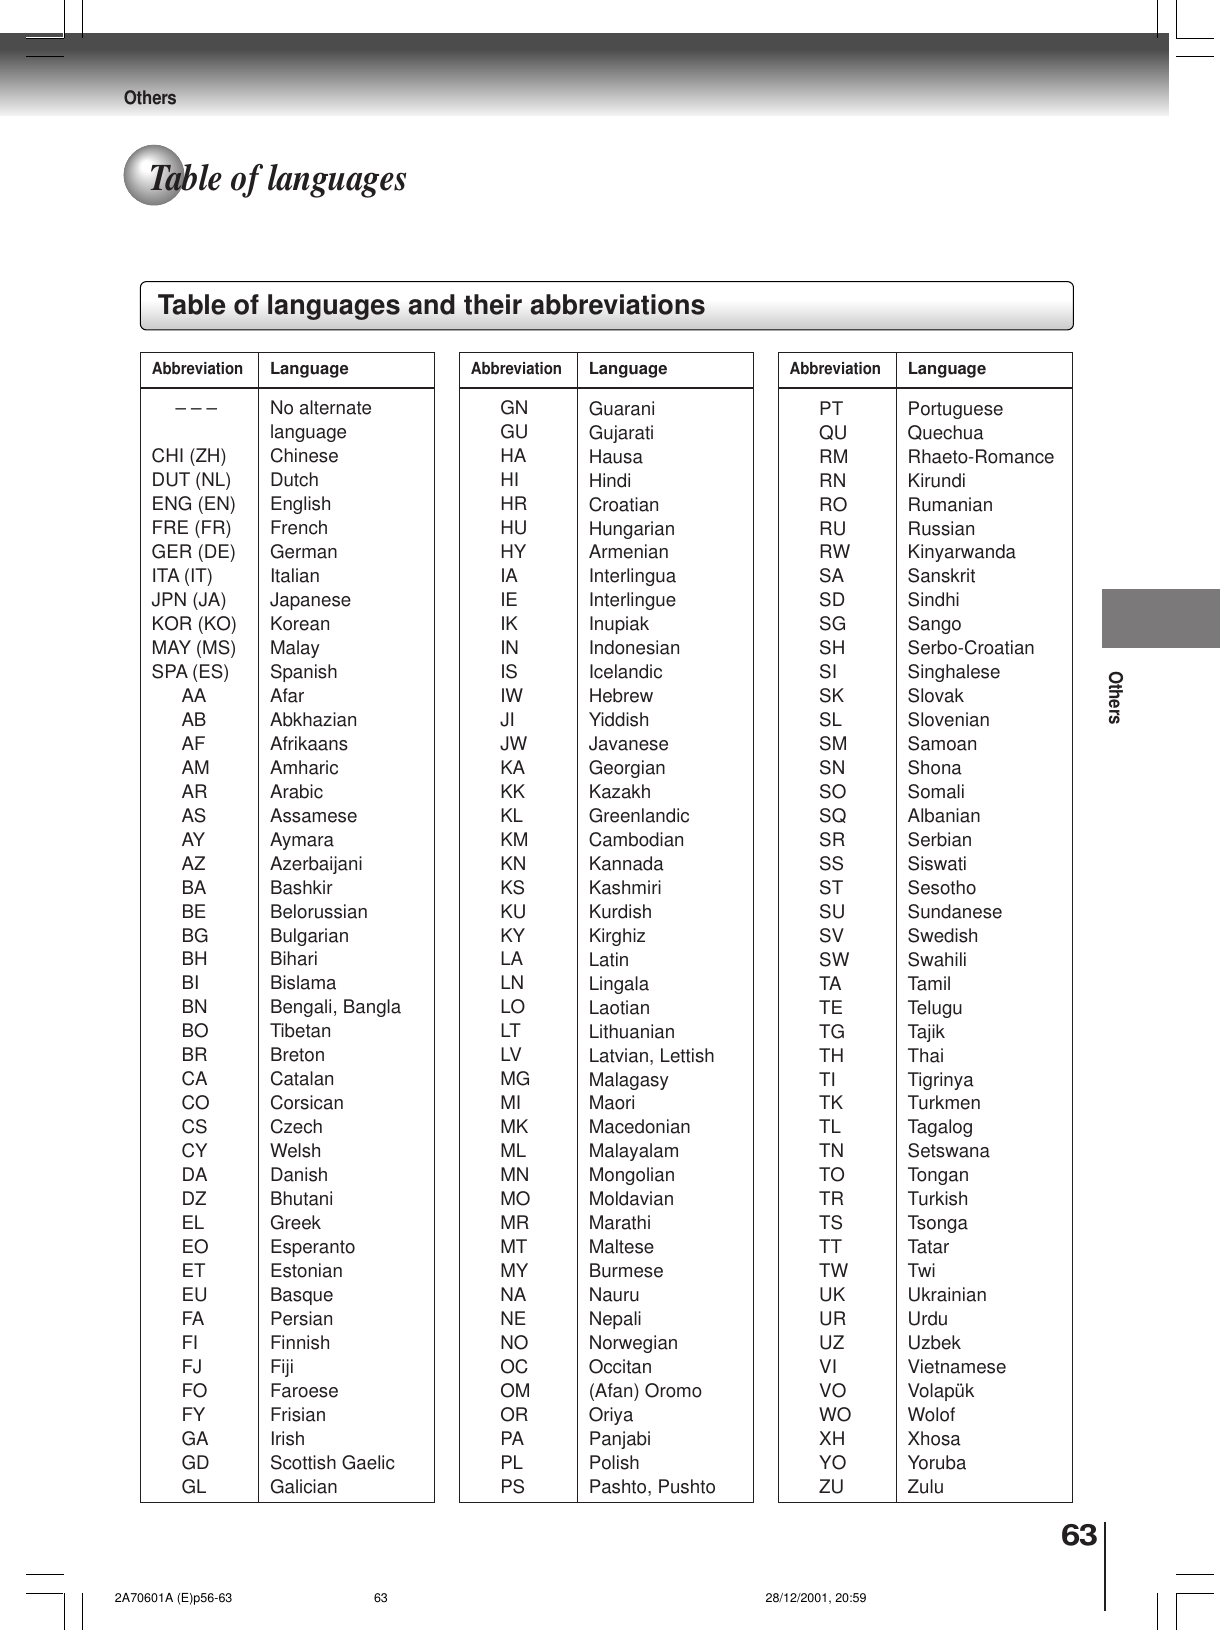 63Function setup (DVD)Table of languages and their abbreviations– – –CHI (ZH)DUT (NL)ENG (EN)FRE (FR)GER (DE)ITA (IT)JPN (JA)KOR (KO)MAY (MS)SPA (ES)AAABAFAMARASAYAZBABEBGBHBIBNBOBRCACOCSCYDADZELEOETEUFAFIFJFOFYGAGDGLNo alternatelanguageChineseDutchEnglishFrenchGermanItalianJapaneseKoreanMalaySpanishAfarAbkhazianAfrikaansAmharicArabicAssameseAymaraAzerbaijaniBashkirBelorussianBulgarianBihariBislamaBengali, BanglaTibetanBretonCatalanCorsicanCzechWelshDanishBhutaniGreekEsperantoEstonianBasquePersianFinnishFijiFaroeseFrisianIrishScottish GaelicGalicianGNGUHAHIHRHUHYIAIEIKINISIWJIJWKAKKKLKMKNKSKUKYLALNLOLTLVMGMIMKMLMNMOMRMTMYNANENOOCOMORPAPLPSPTQURMRNRORURWSASDSGSHSISKSLSMSNSOSQSRSSSTSUSVSWTATETGTHTITKTLTNTOTRTSTTTWUKURUZVIVOWOXHYOZUGuaraniGujaratiHausaHindiCroatianHungarianArmenianInterlinguaInterlingueInupiakIndonesianIcelandicHebrewYiddishJavaneseGeorgianKazakhGreenlandicCambodianKannadaKashmiriKurdishKirghizLatinLingalaLaotianLithuanianLatvian, LettishMalagasyMaoriMacedonianMalayalamMongolianMoldavianMarathiMalteseBurmeseNauruNepaliNorwegianOccitan(Afan) OromoOriyaPanjabiPolishPashto, PushtoPortugueseQuechuaRhaeto-RomanceKirundiRumanianRussianKinyarwandaSanskritSindhiSangoSerbo-CroatianSinghaleseSlovakSlovenianSamoanShonaSomaliAlbanianSerbianSiswatiSesothoSundaneseSwedishSwahiliTamilTeluguTajikThaiTigrinyaTurkmenTagalogSetswanaTonganTurkishTsongaTatarTwiUkrainianUrduUzbekVietnameseVolapükWolofXhosaYorubaZuluAbbreviationLanguageAbbreviationLanguageAbbreviationLanguageTable of languagesOthersOthers 2A70601A (E)p56-63 28/12/2001, 20:5963